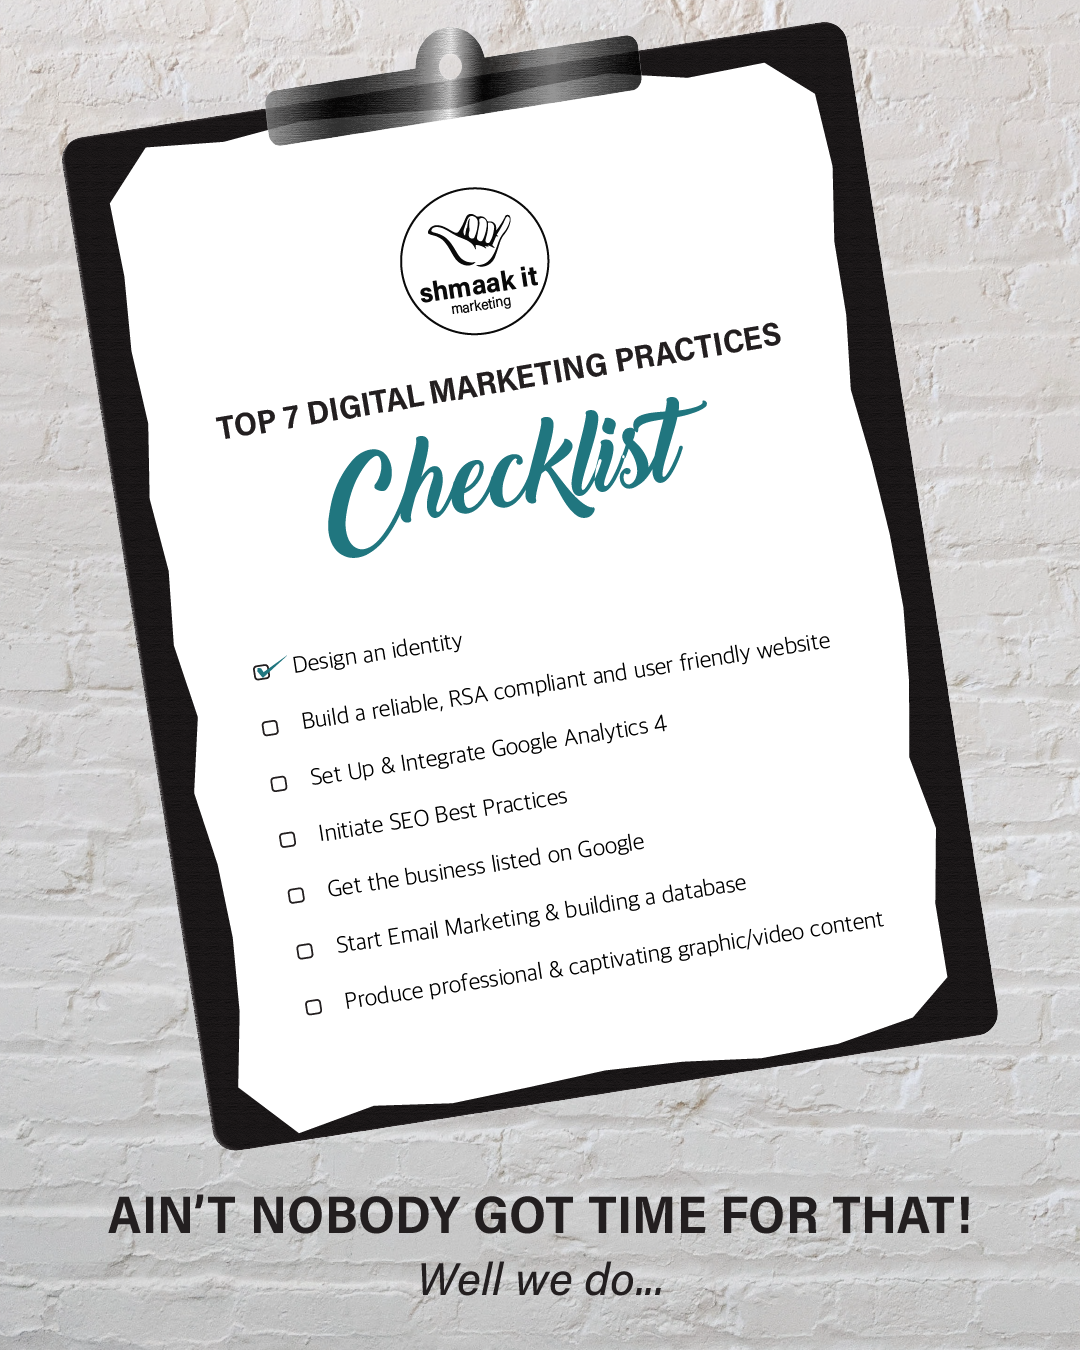 7 Top Digital Marketing Practices Checklist shmaak it marketing